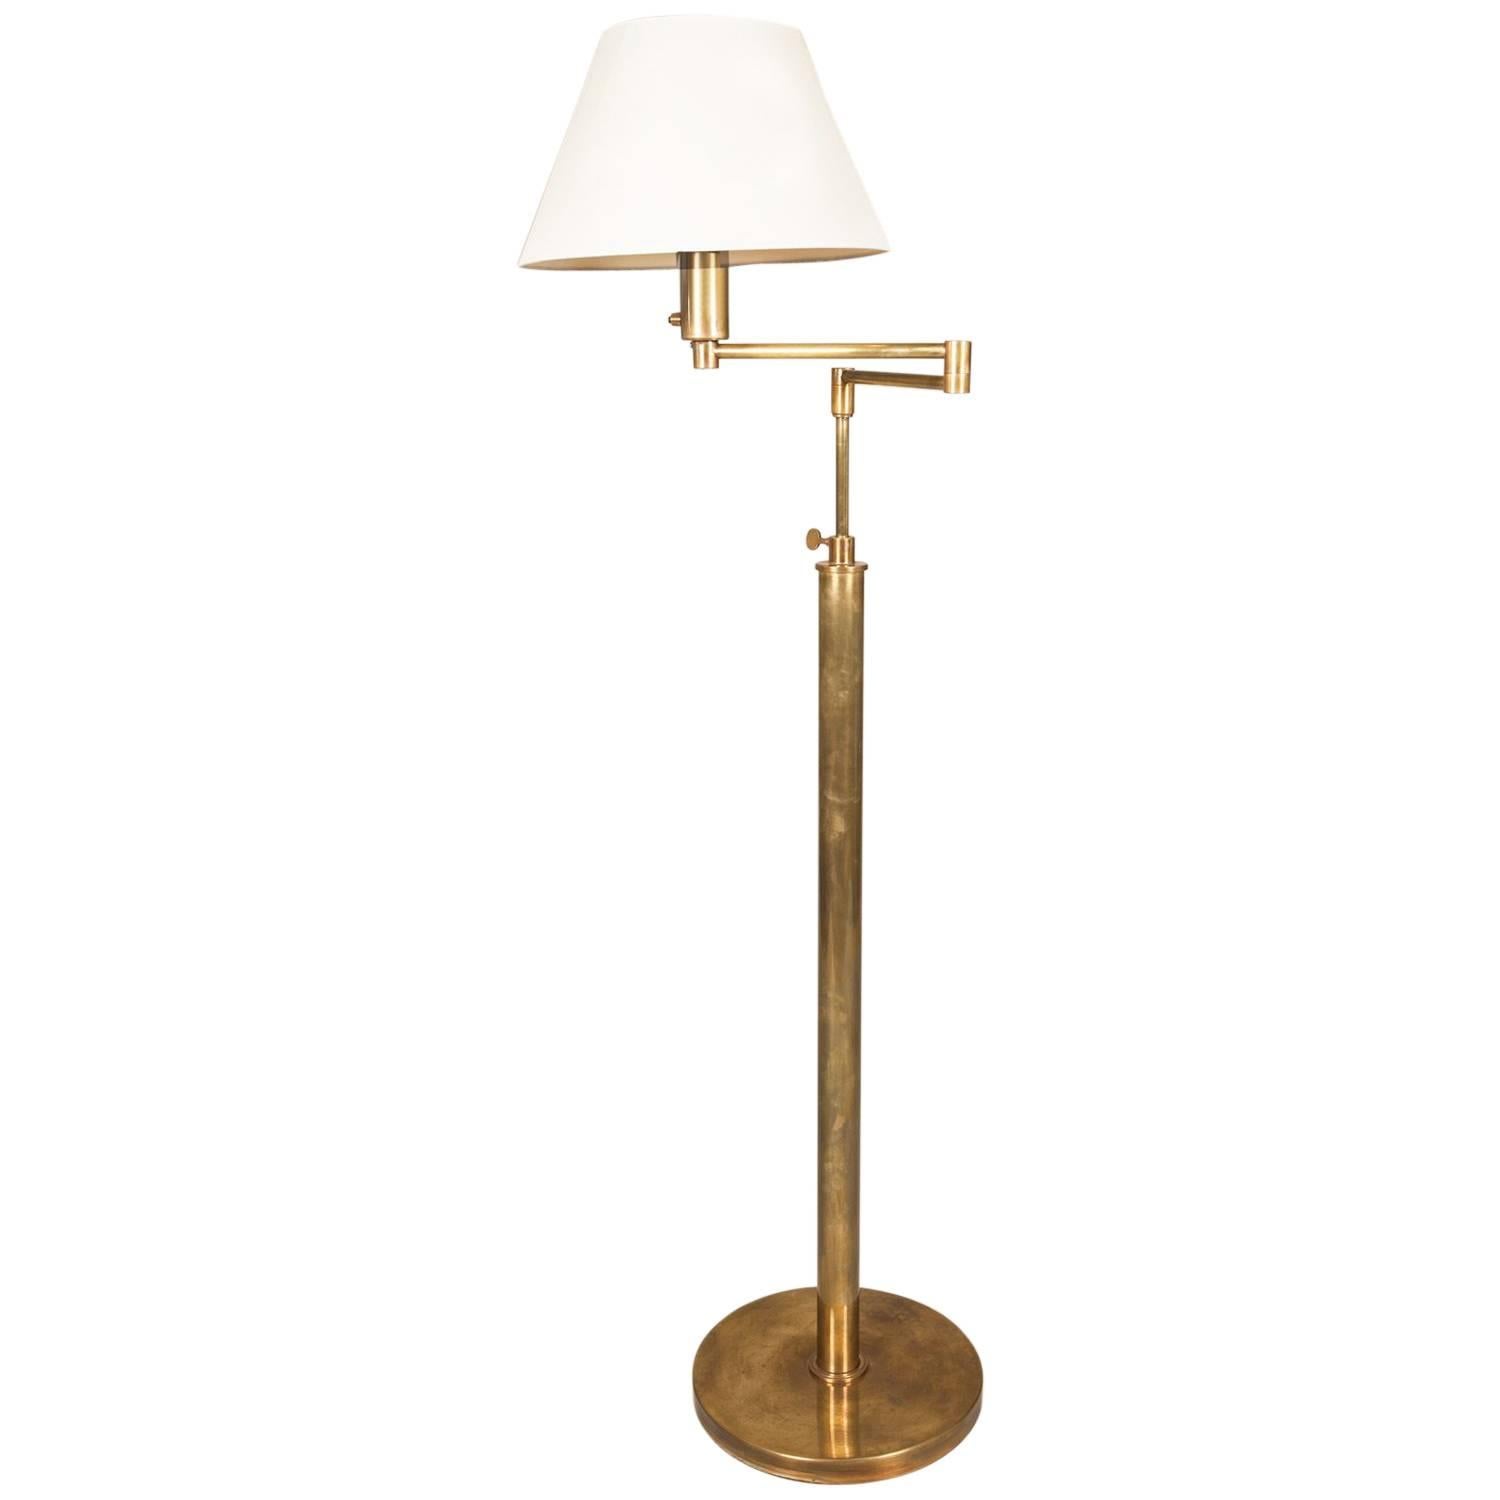 Billy Baldwin Standard Lamp For Sale